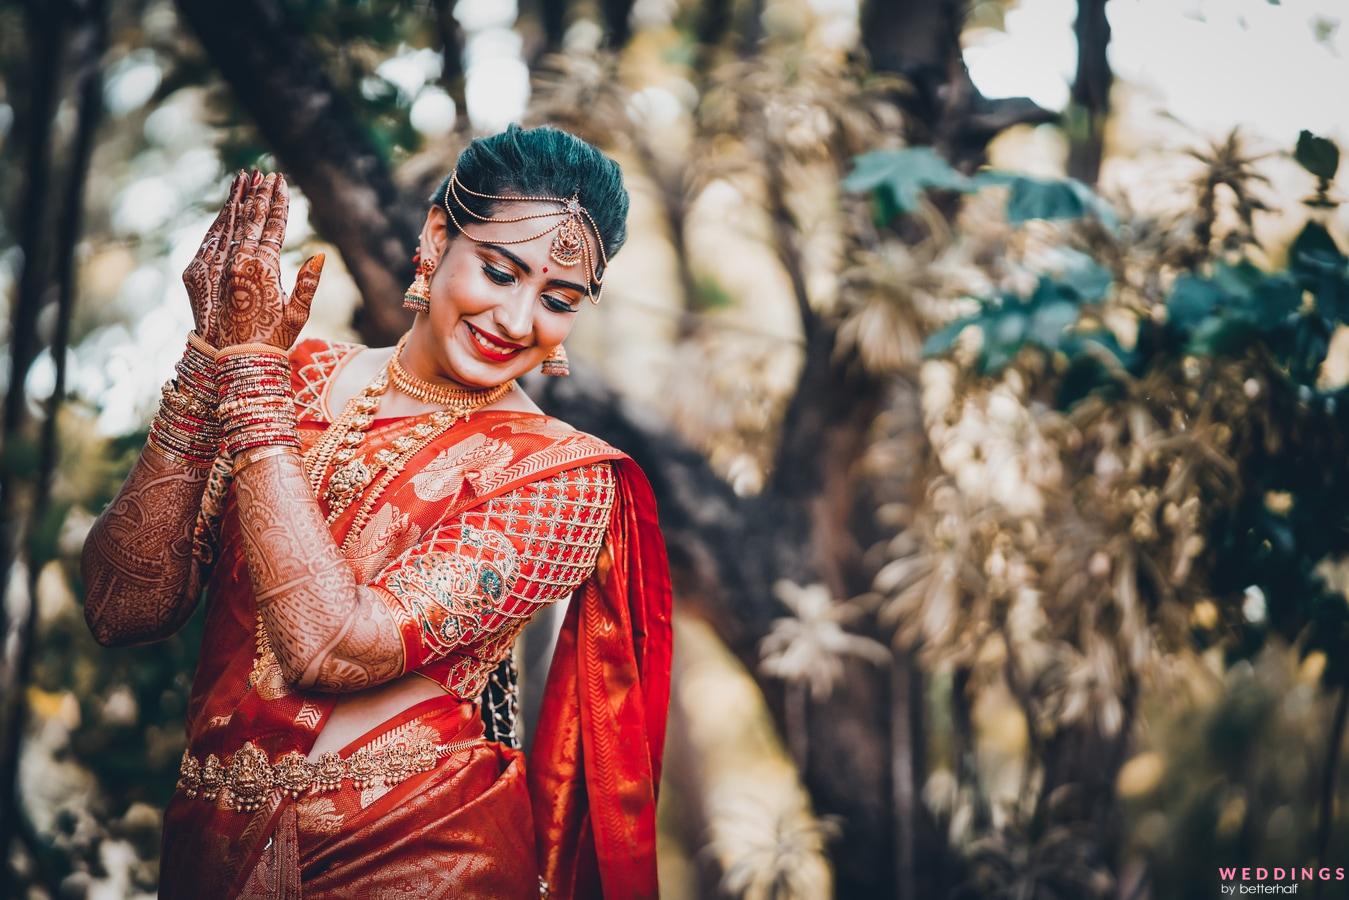 Pin by sanyukta Shil on Bride. | Bride photoshoot, Indian bride poses,  Indian wedding poses